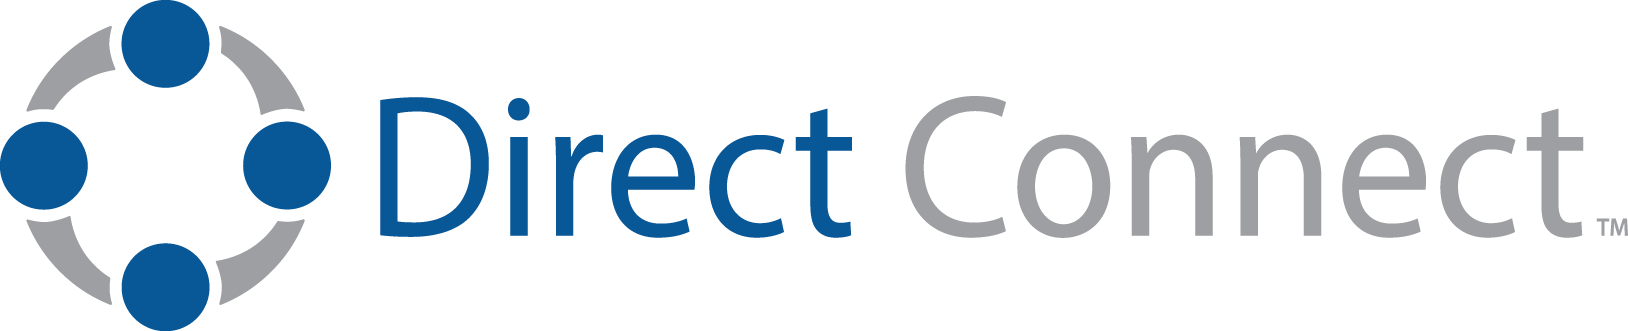 Direct connect. Директ Коннект что это. Direct service лого. Connect logo.